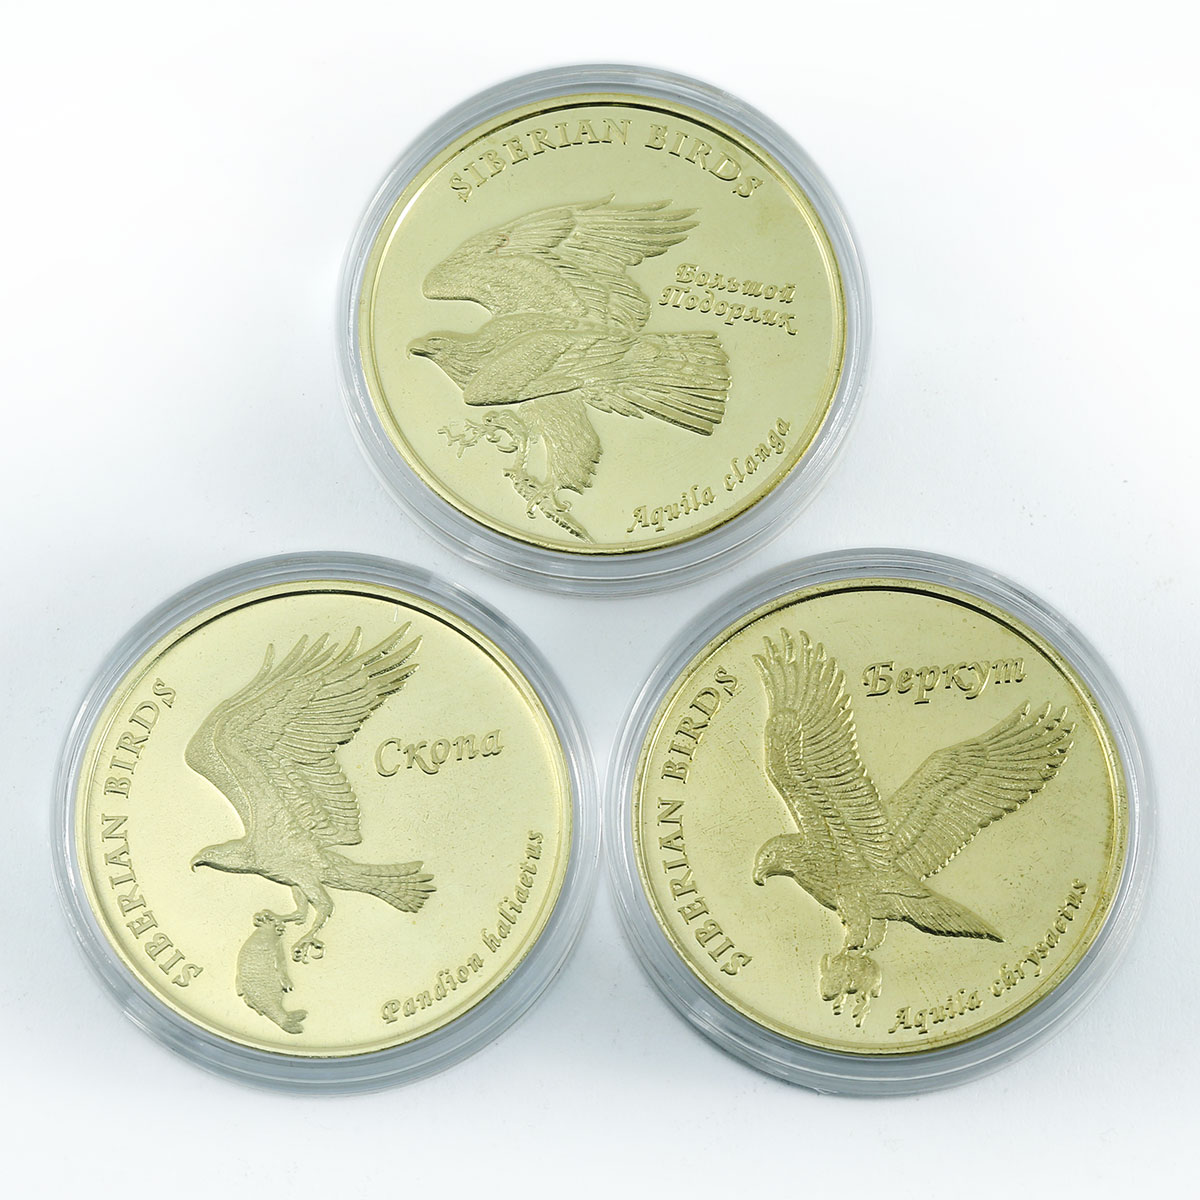 Falcon Island 5 dollars set of 3 coins Siberian birds 2018